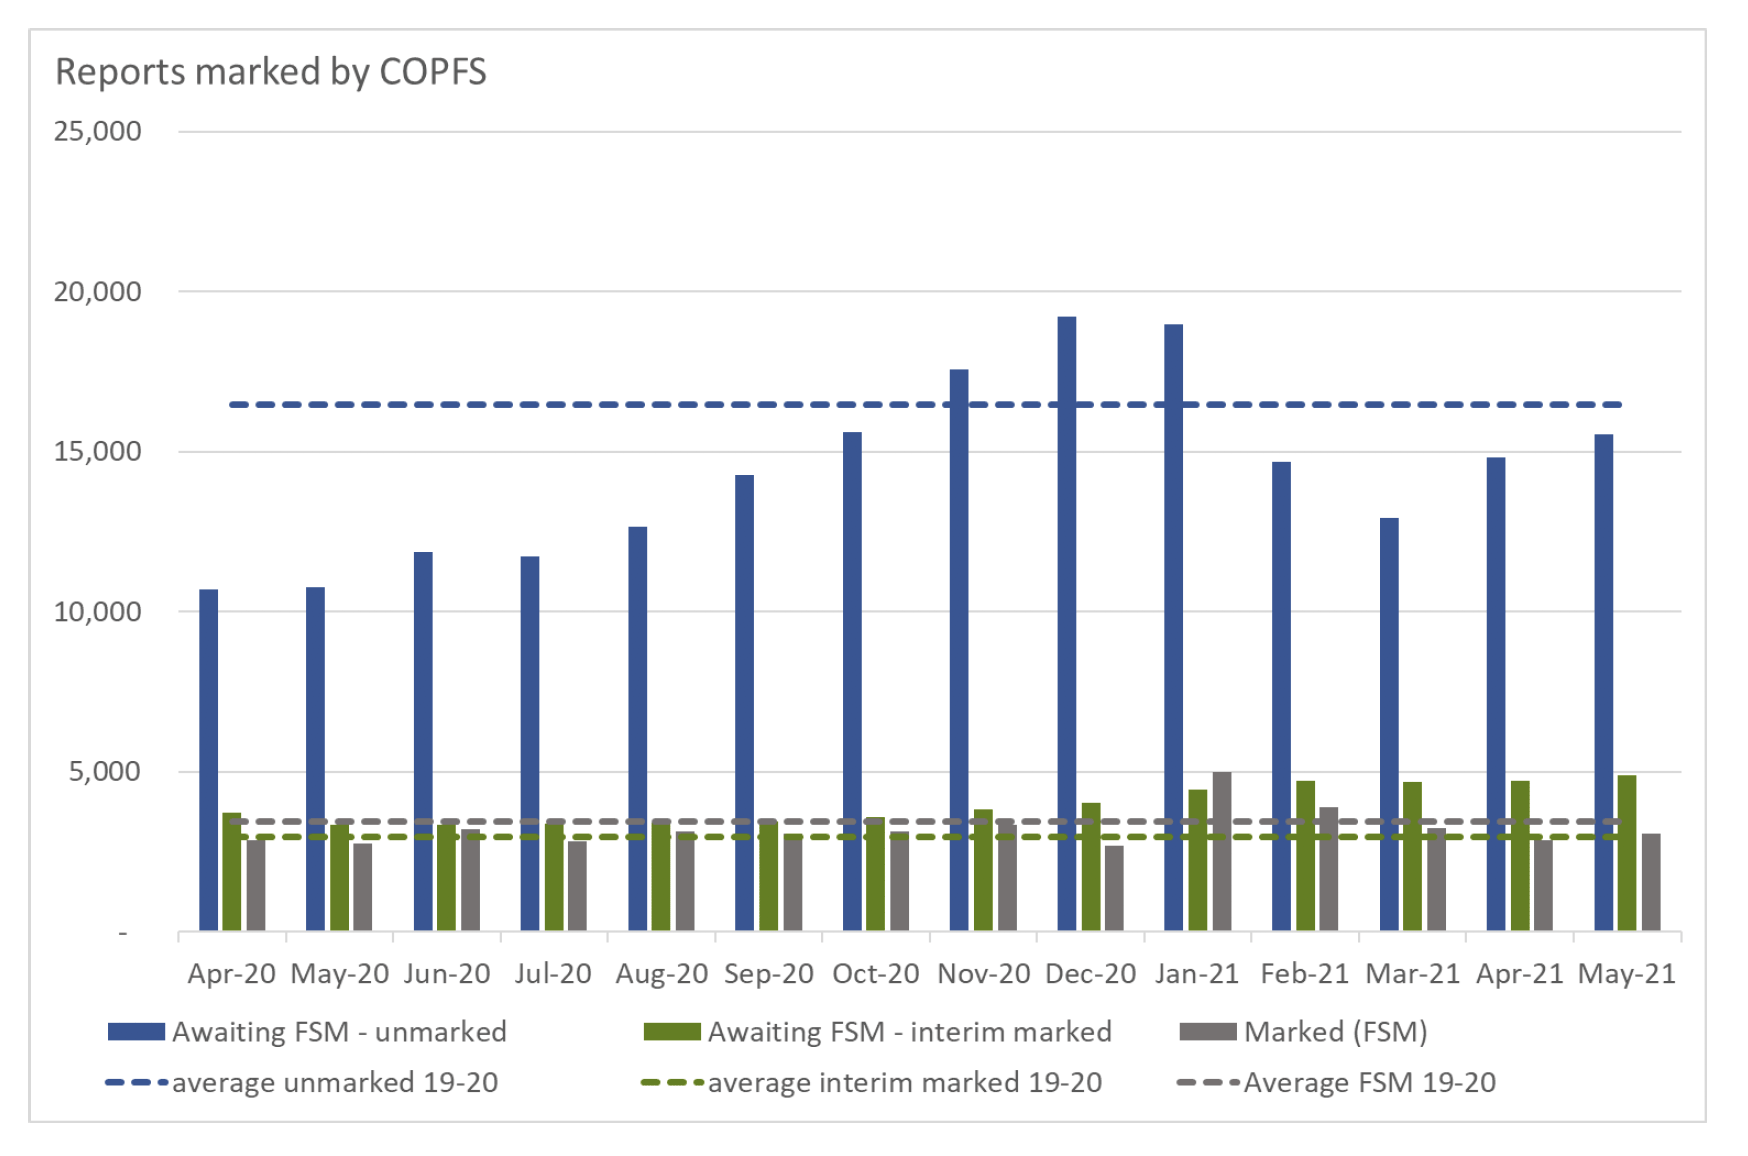 Bar chart showing marking status of COPFS reports